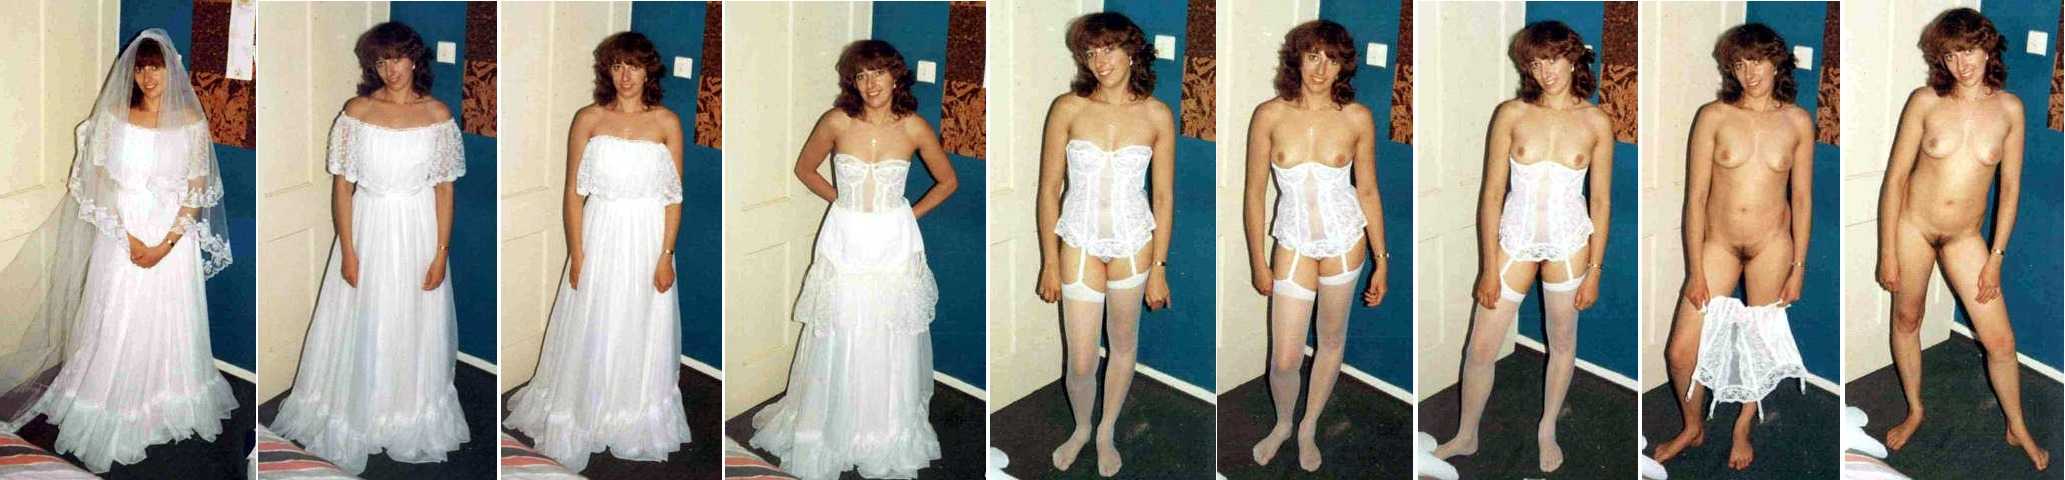 adrian ridgeway add photo amateur bride dressed undressed